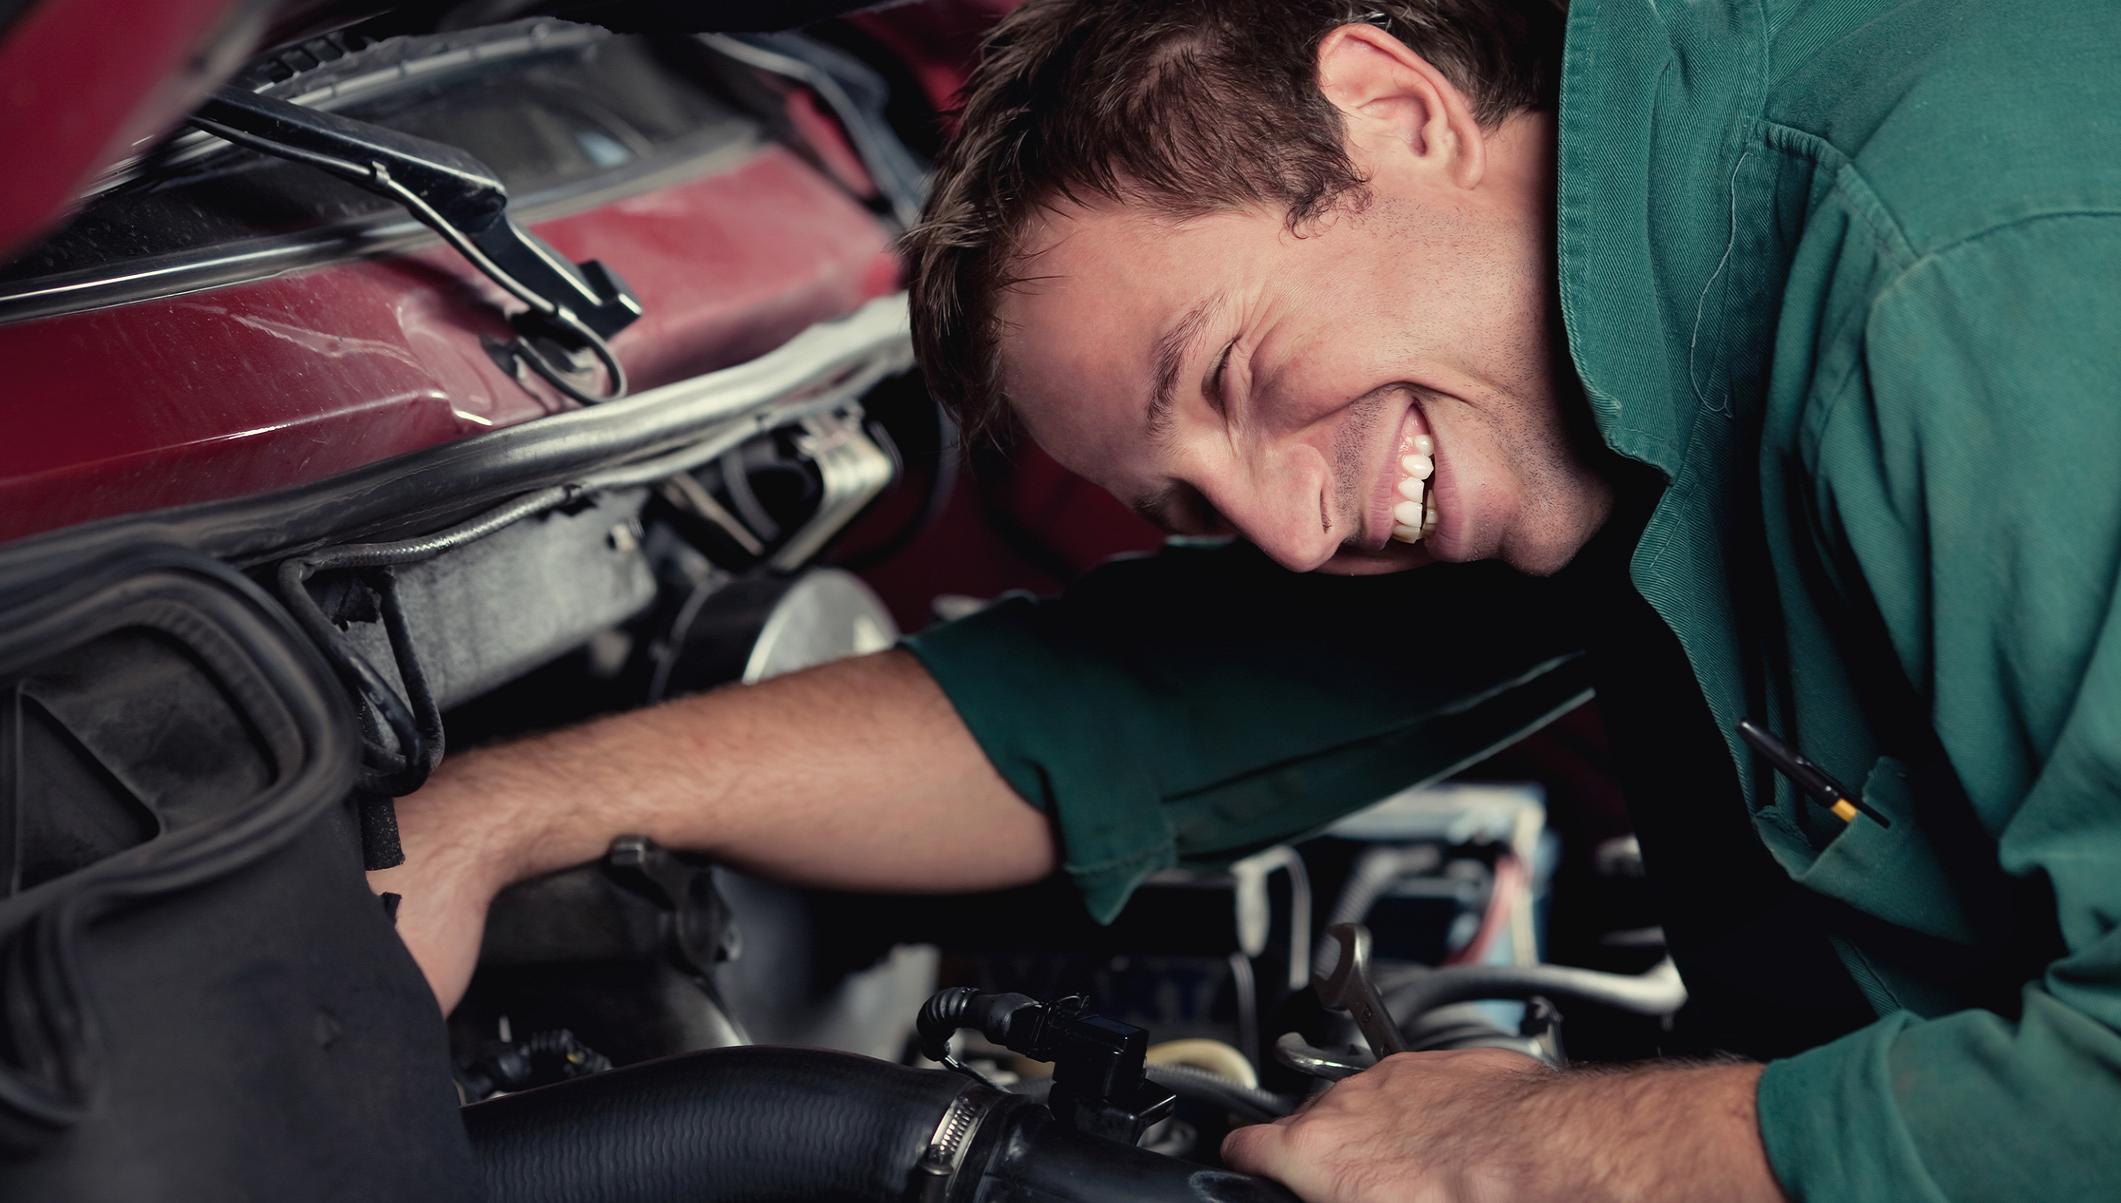 Mechanic fixes. Fixing a car. Fixing the car is beautiful. Фото механика когда он отдыхает. …….Your car fixed by the Mechanic?.